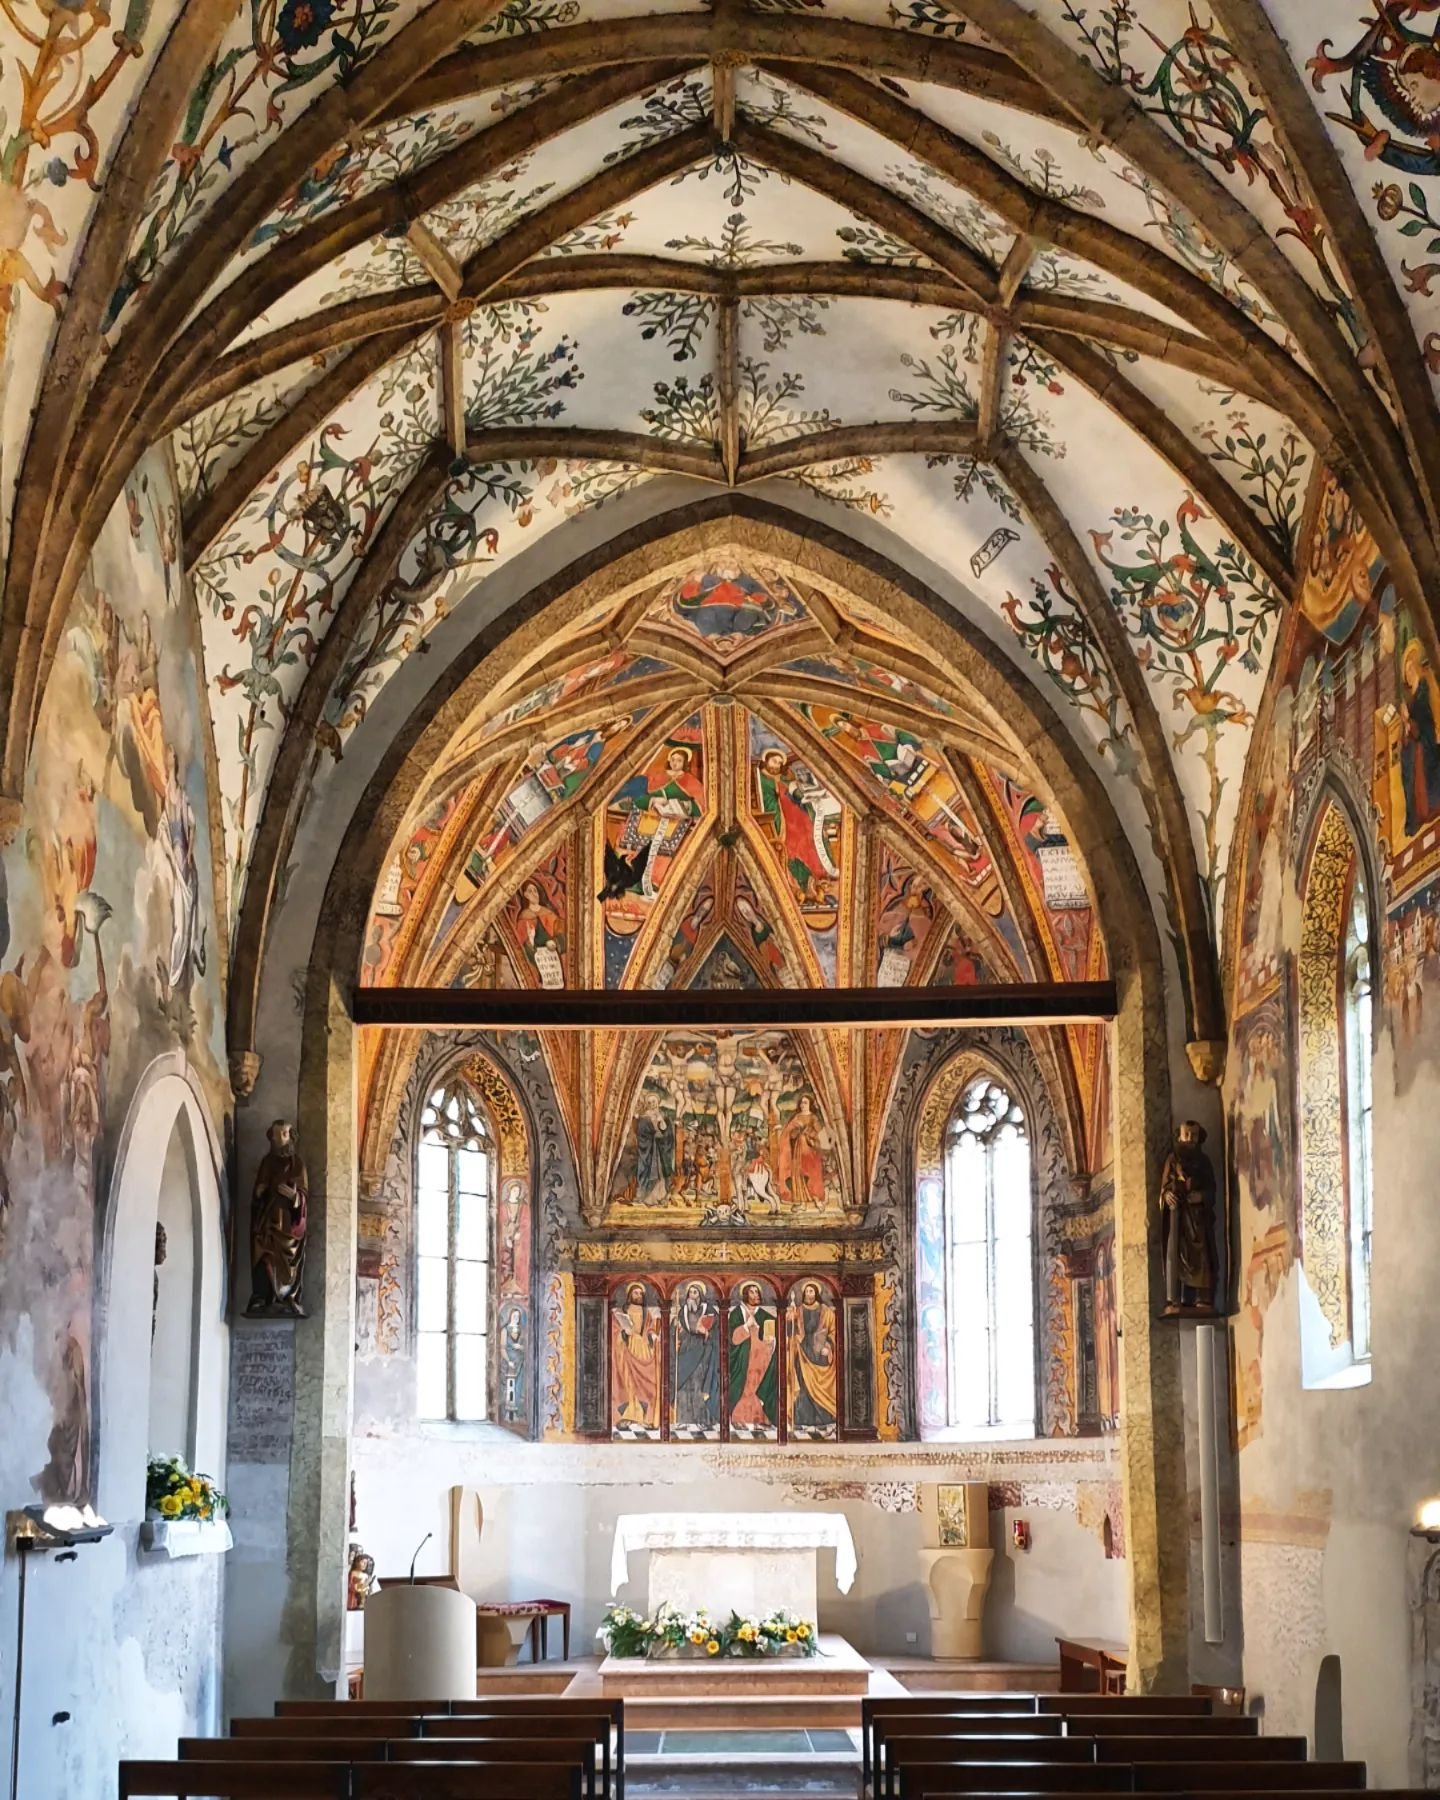 La iglesia de San Pedro en Cembra (Trentino)

Arquitectura y frescos de la primera mitad del siglo XVI

#cembra #valdicembra #valle #trentino #visittrentino #visitvaldicembra #gu&iacute;a #viajaraitalia